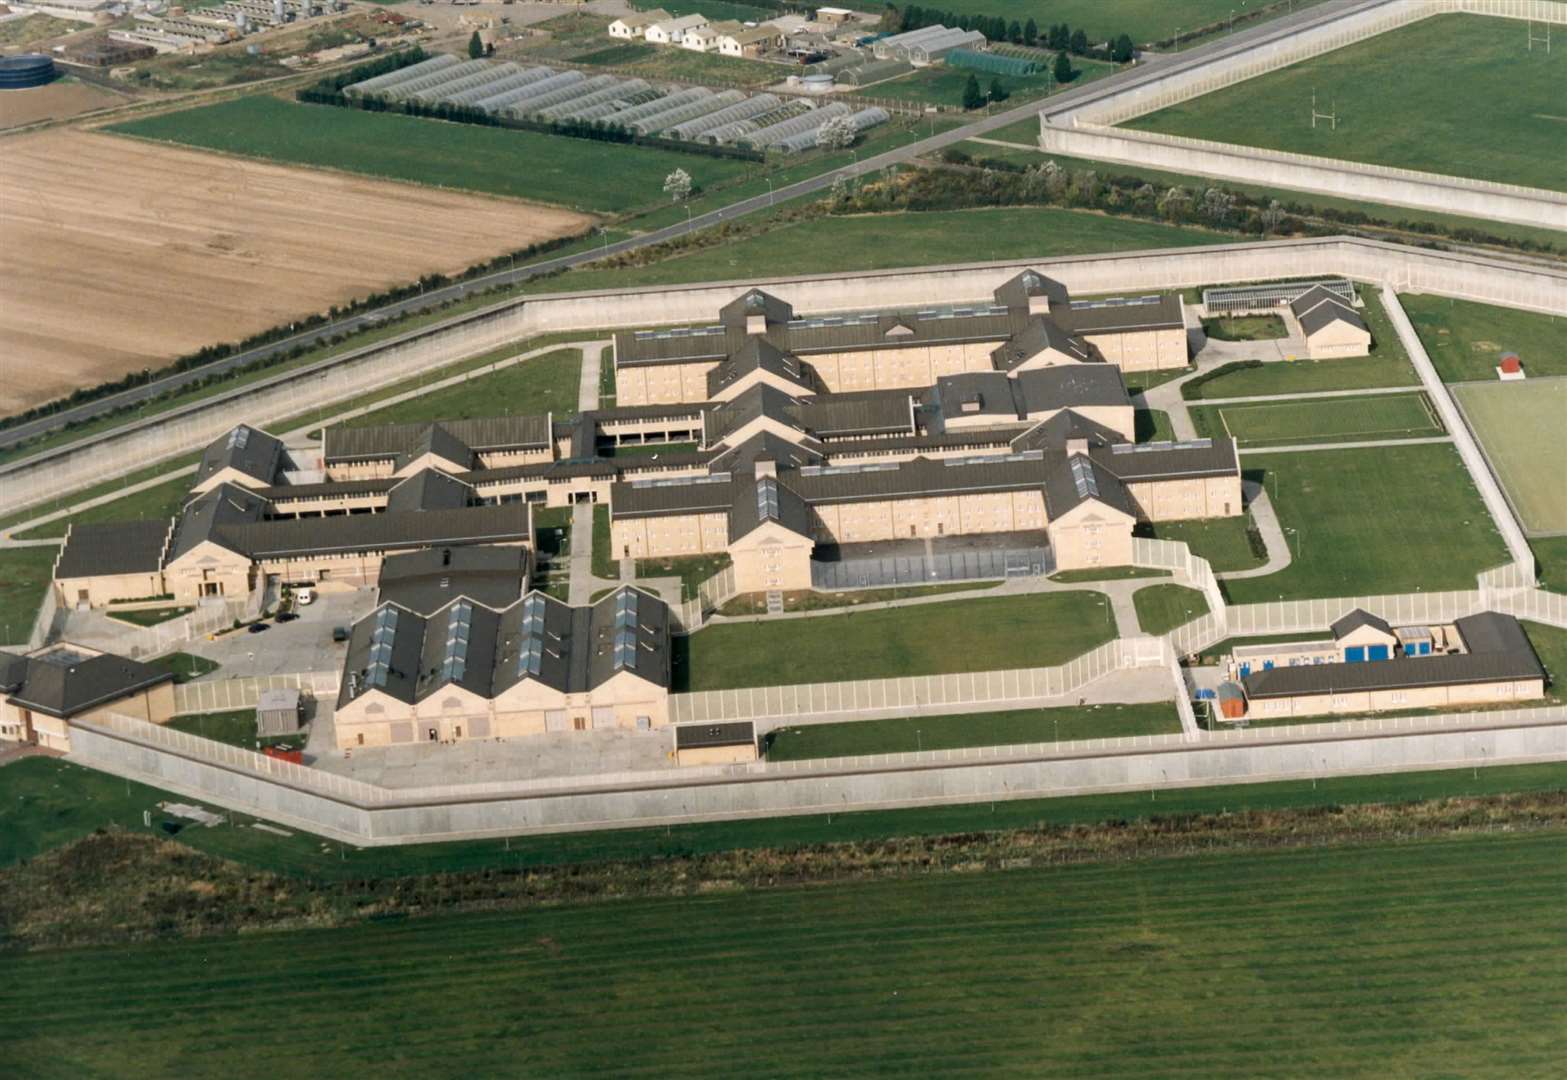 Elmley Prison in Eastchurch